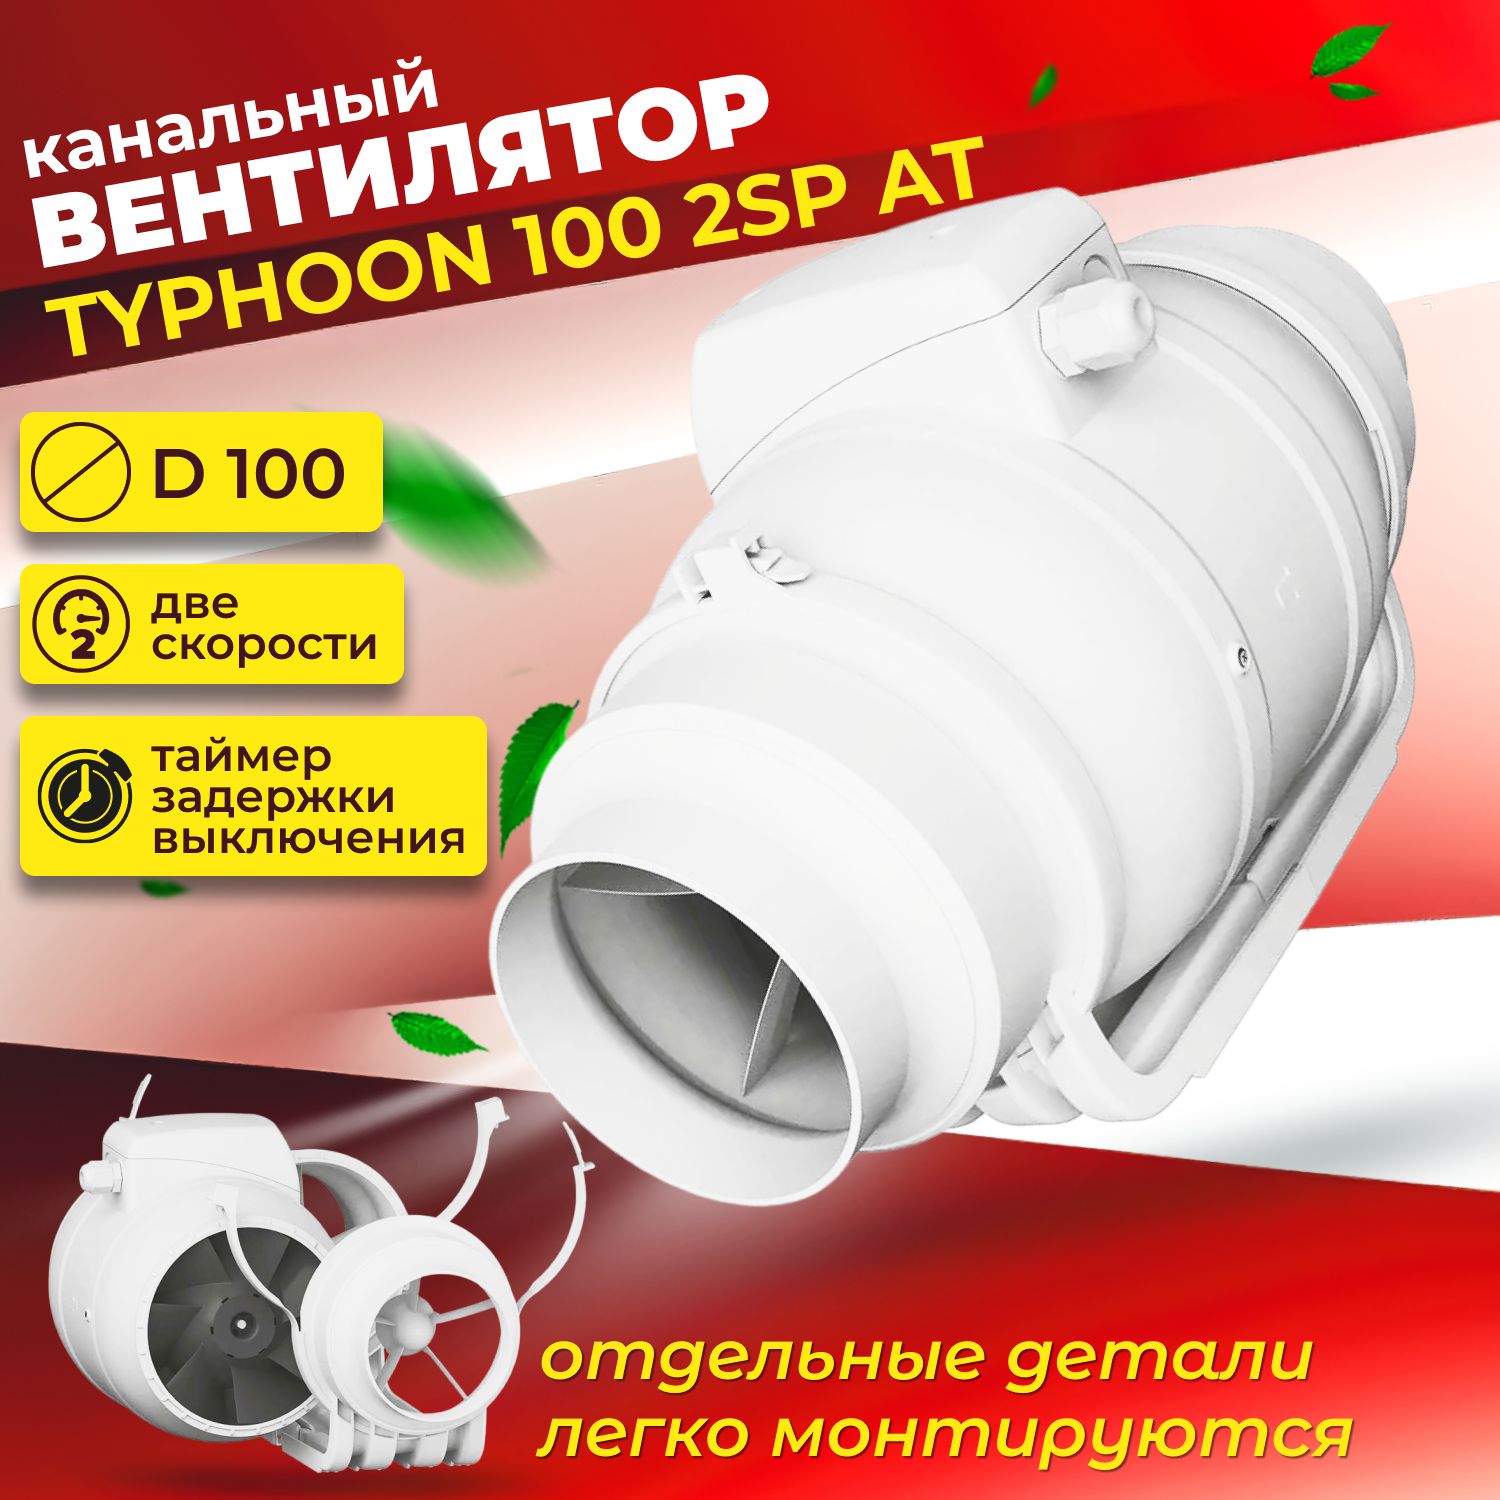 Typhoon 100 2sp. Канальный вентилятор Typhoon 200 мм какой конденсатор.